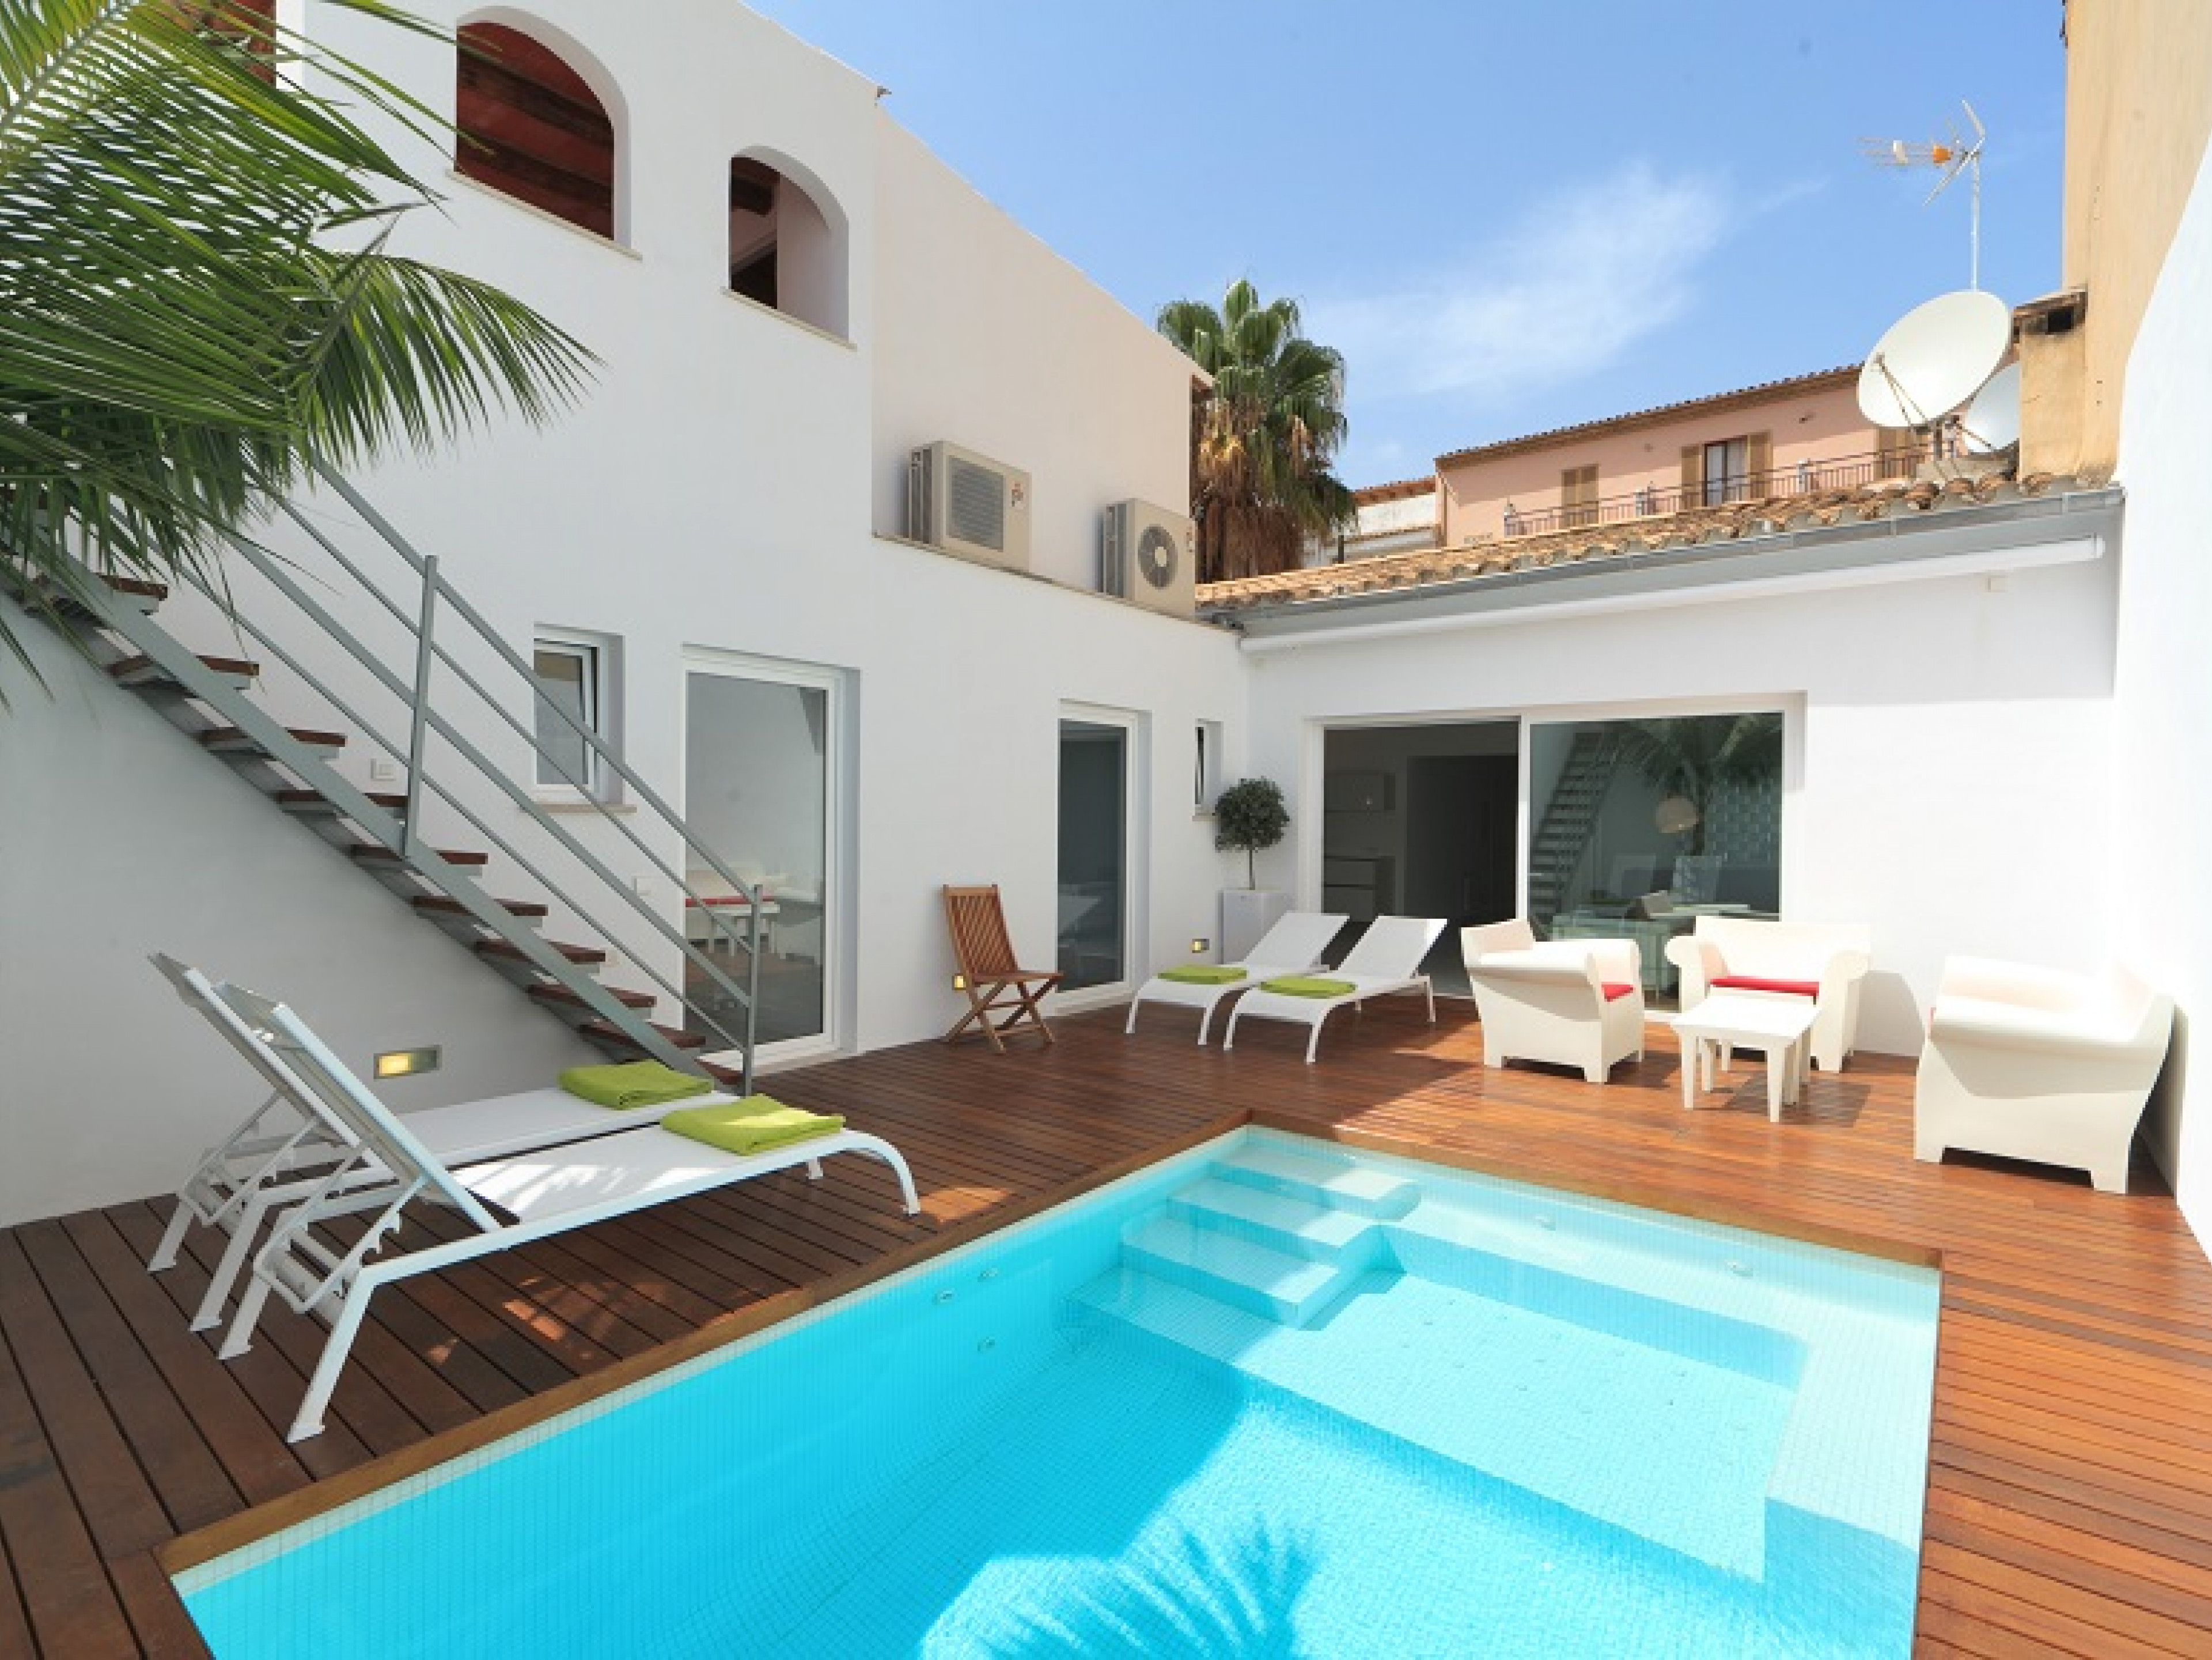 Casa Puerto - vacation rentals in Mallorca near the beach